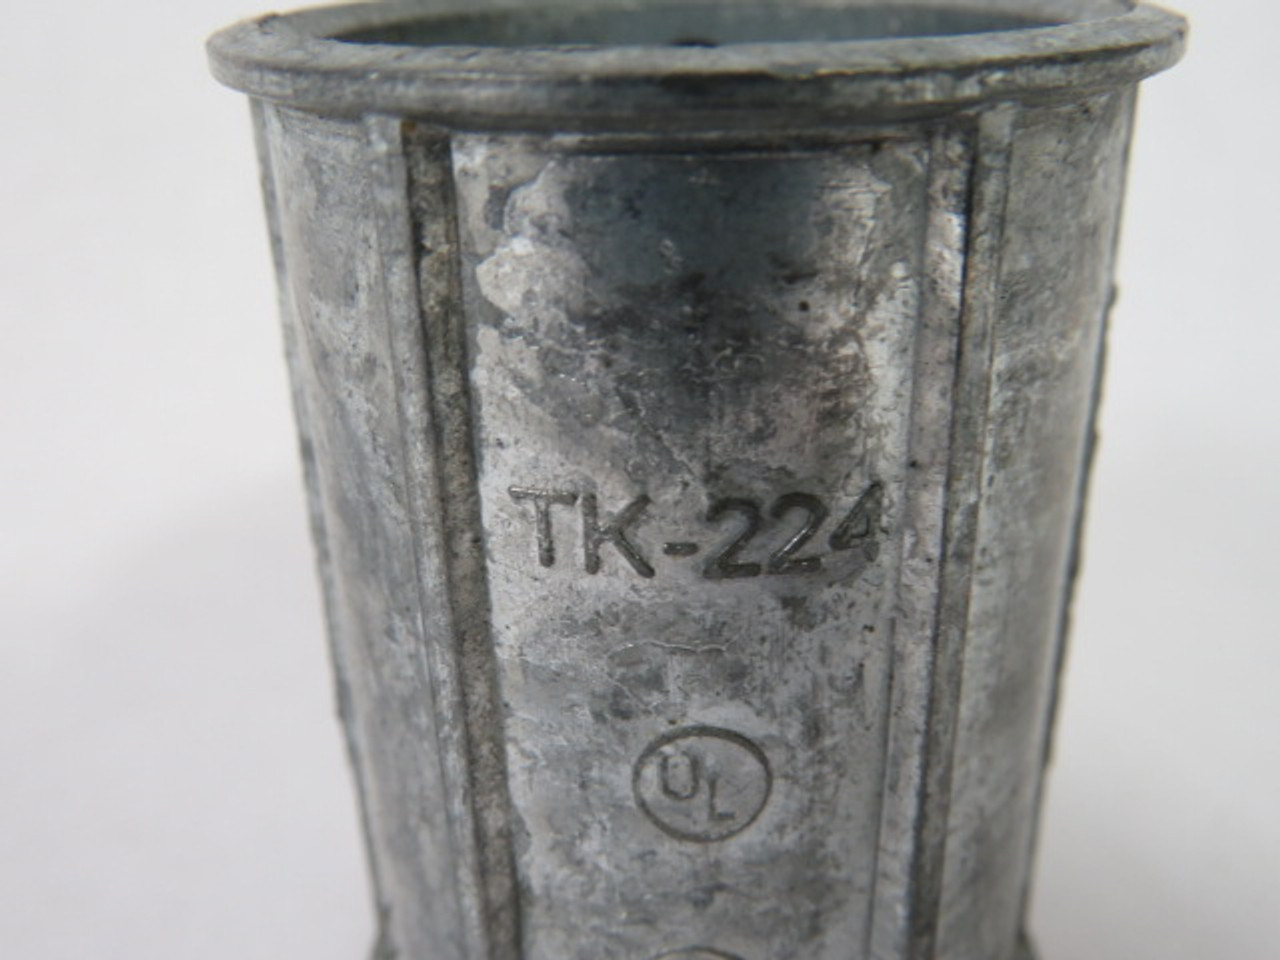 Thomas & Betts TK-224 Screw Coupling 1-1/4" USED